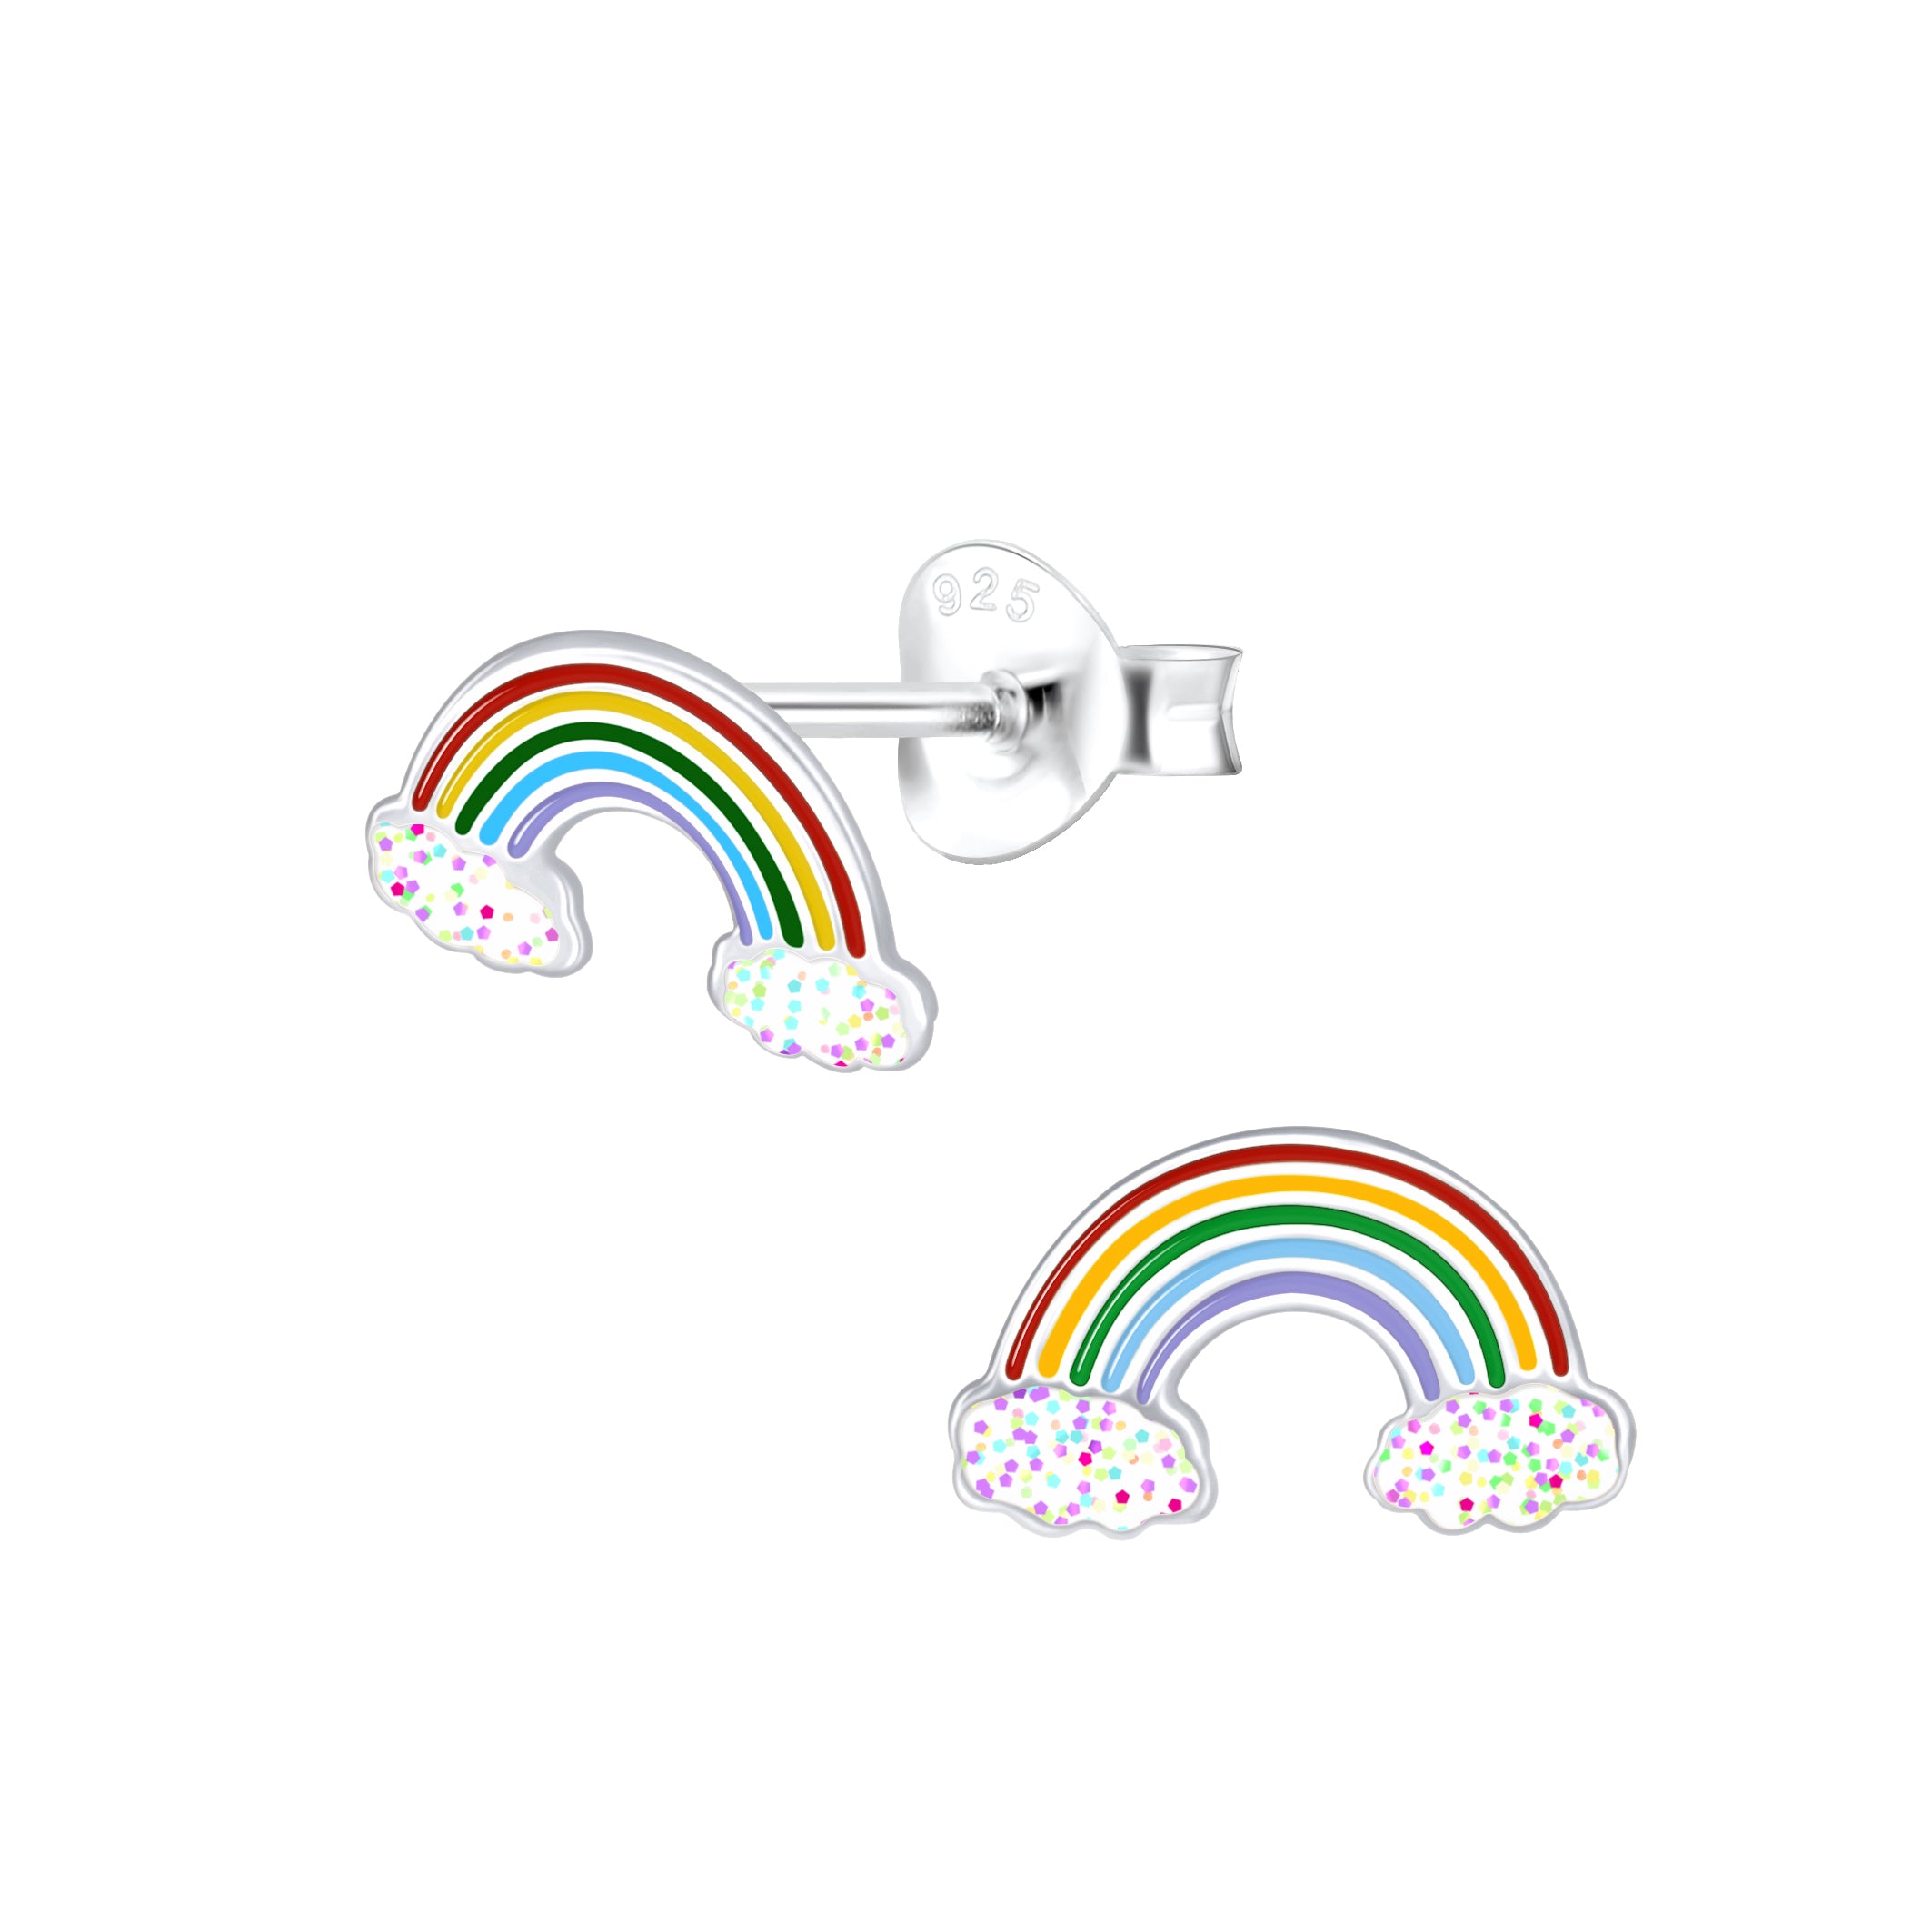 Shooting Star Rainbow Star Glitter Pop Art Earrings Acrylic Jewelry | eBay